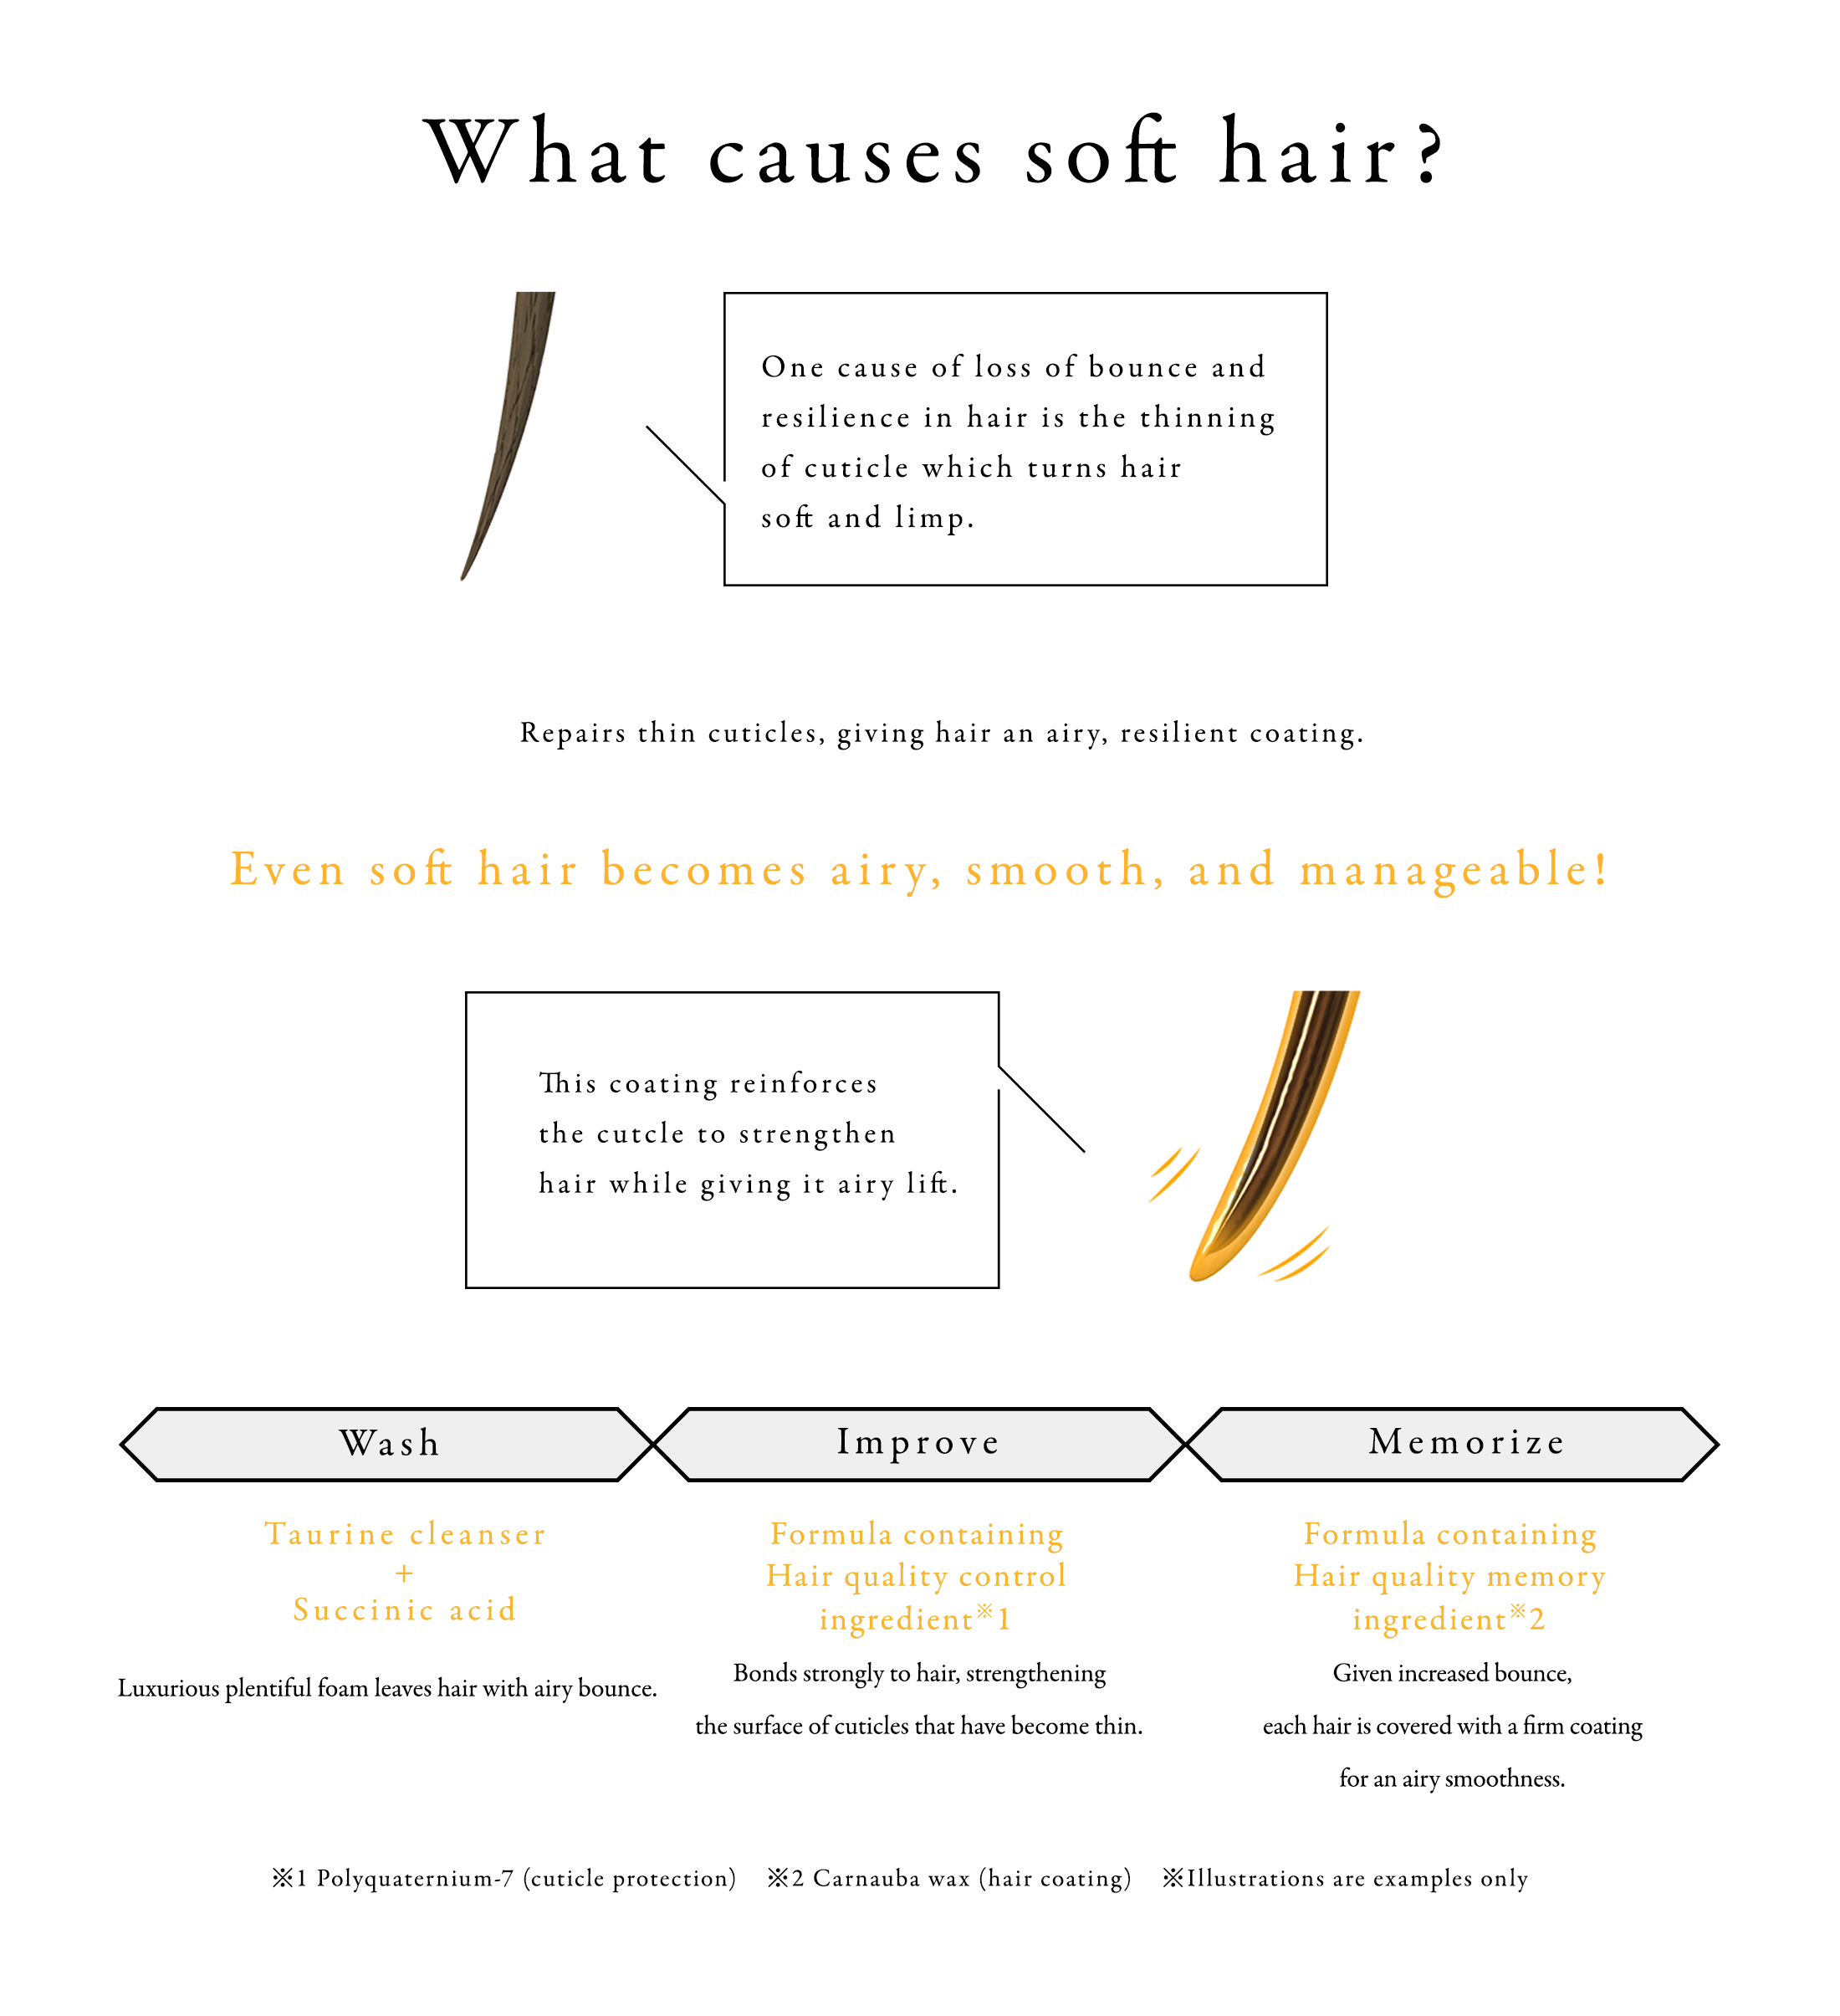 What causes soft hair?